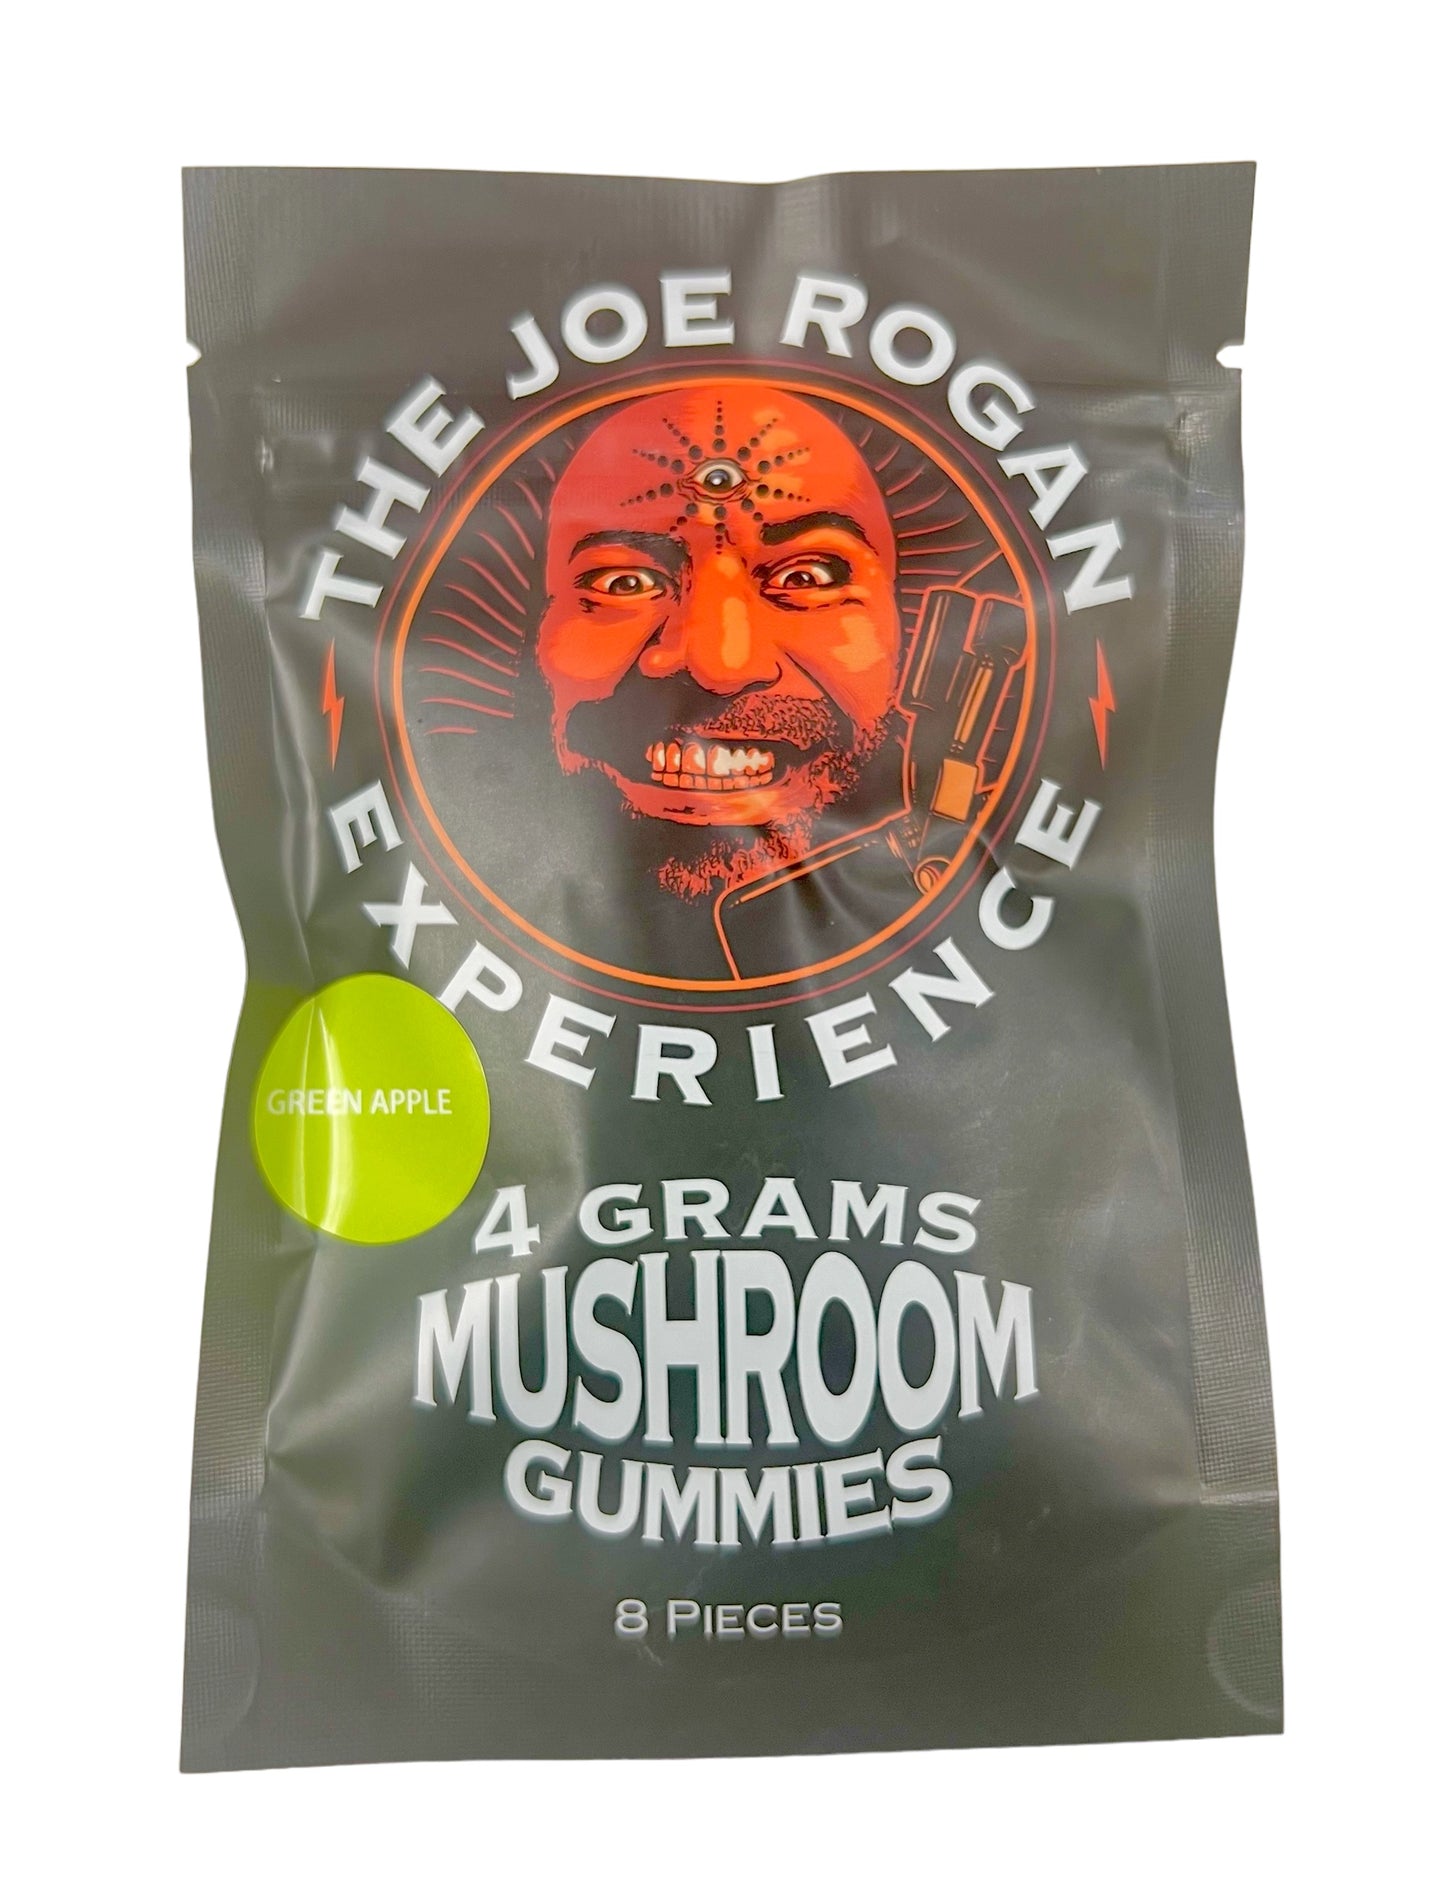 Joe Rogan Gummies